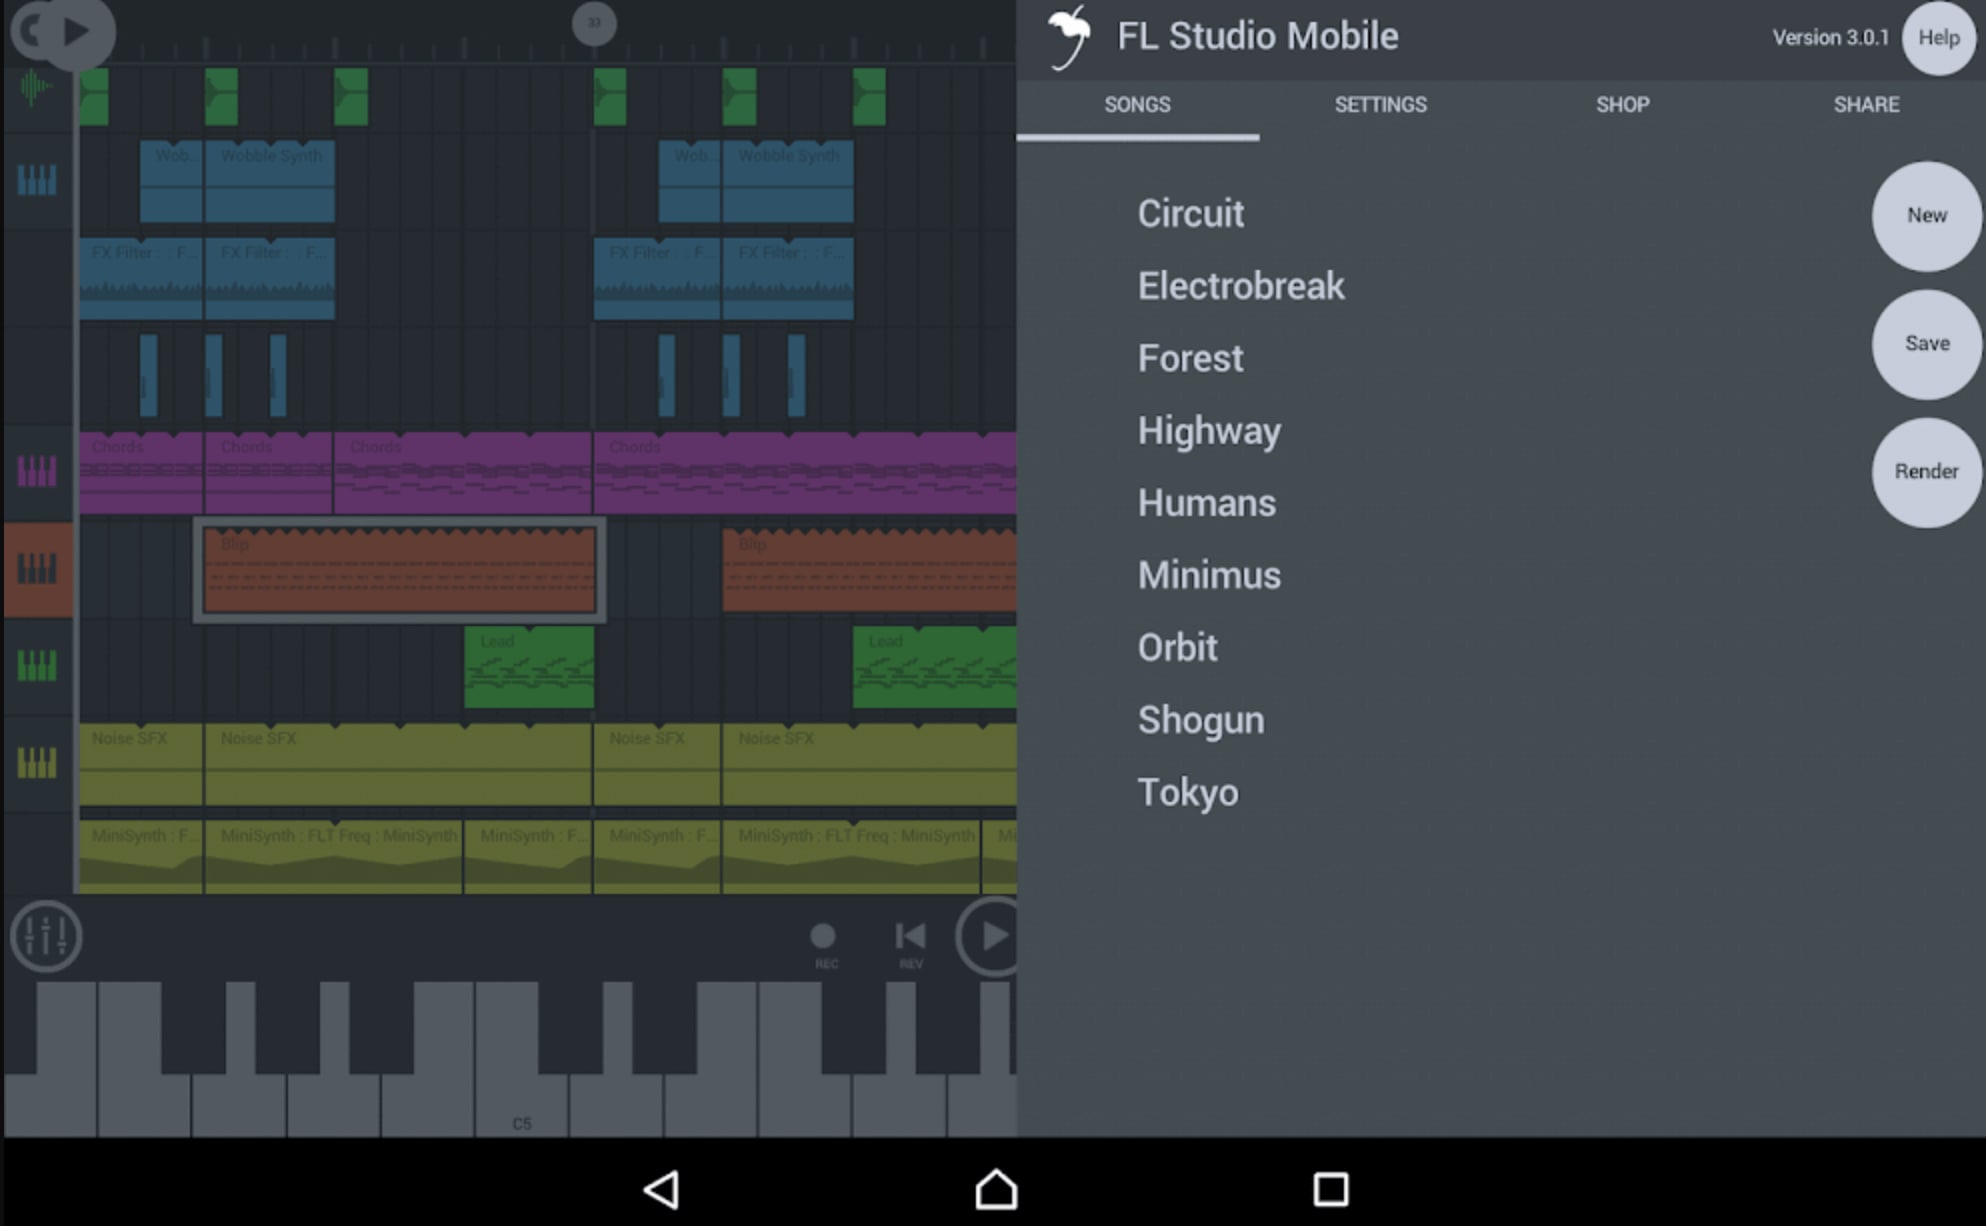 editor audio per Android - FL Studio Mobile 